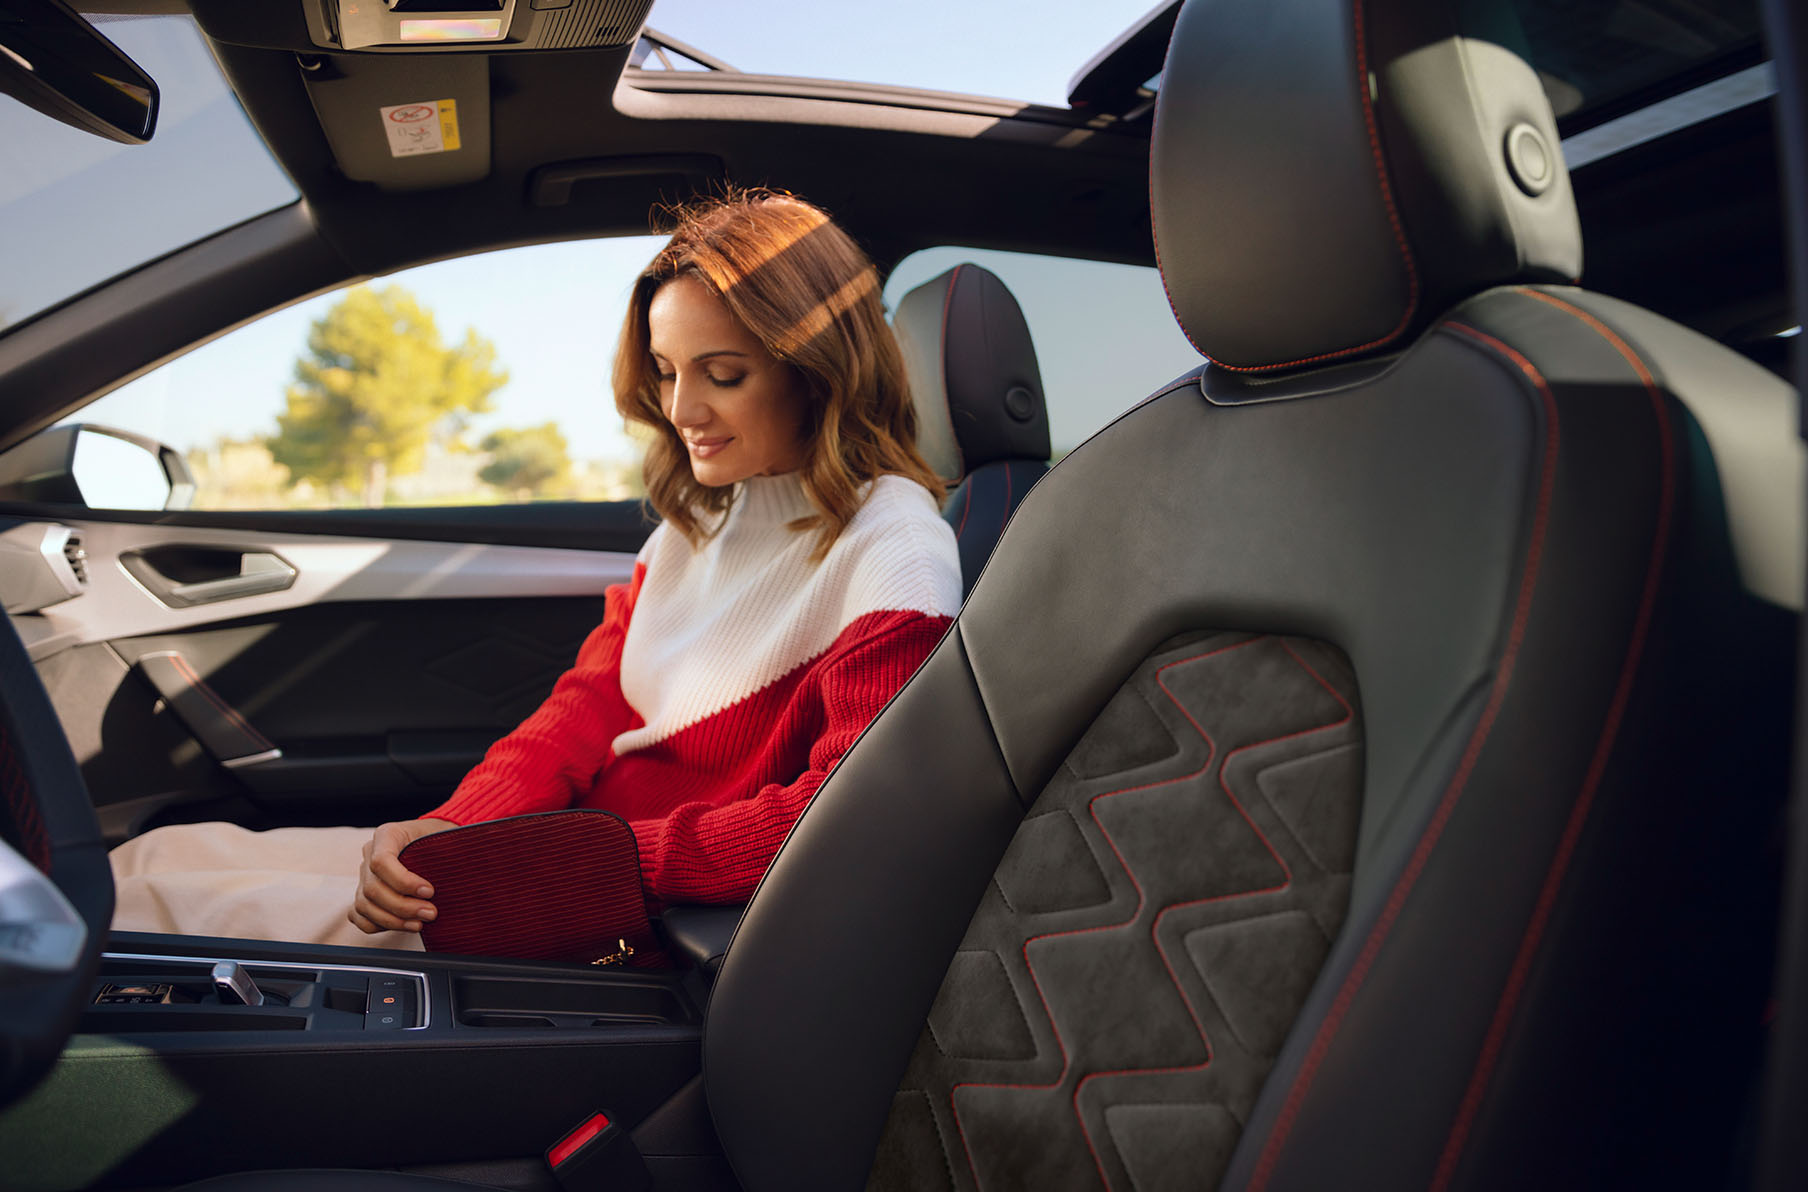 woman sitting in the passenger seat, enjoying the seat interior